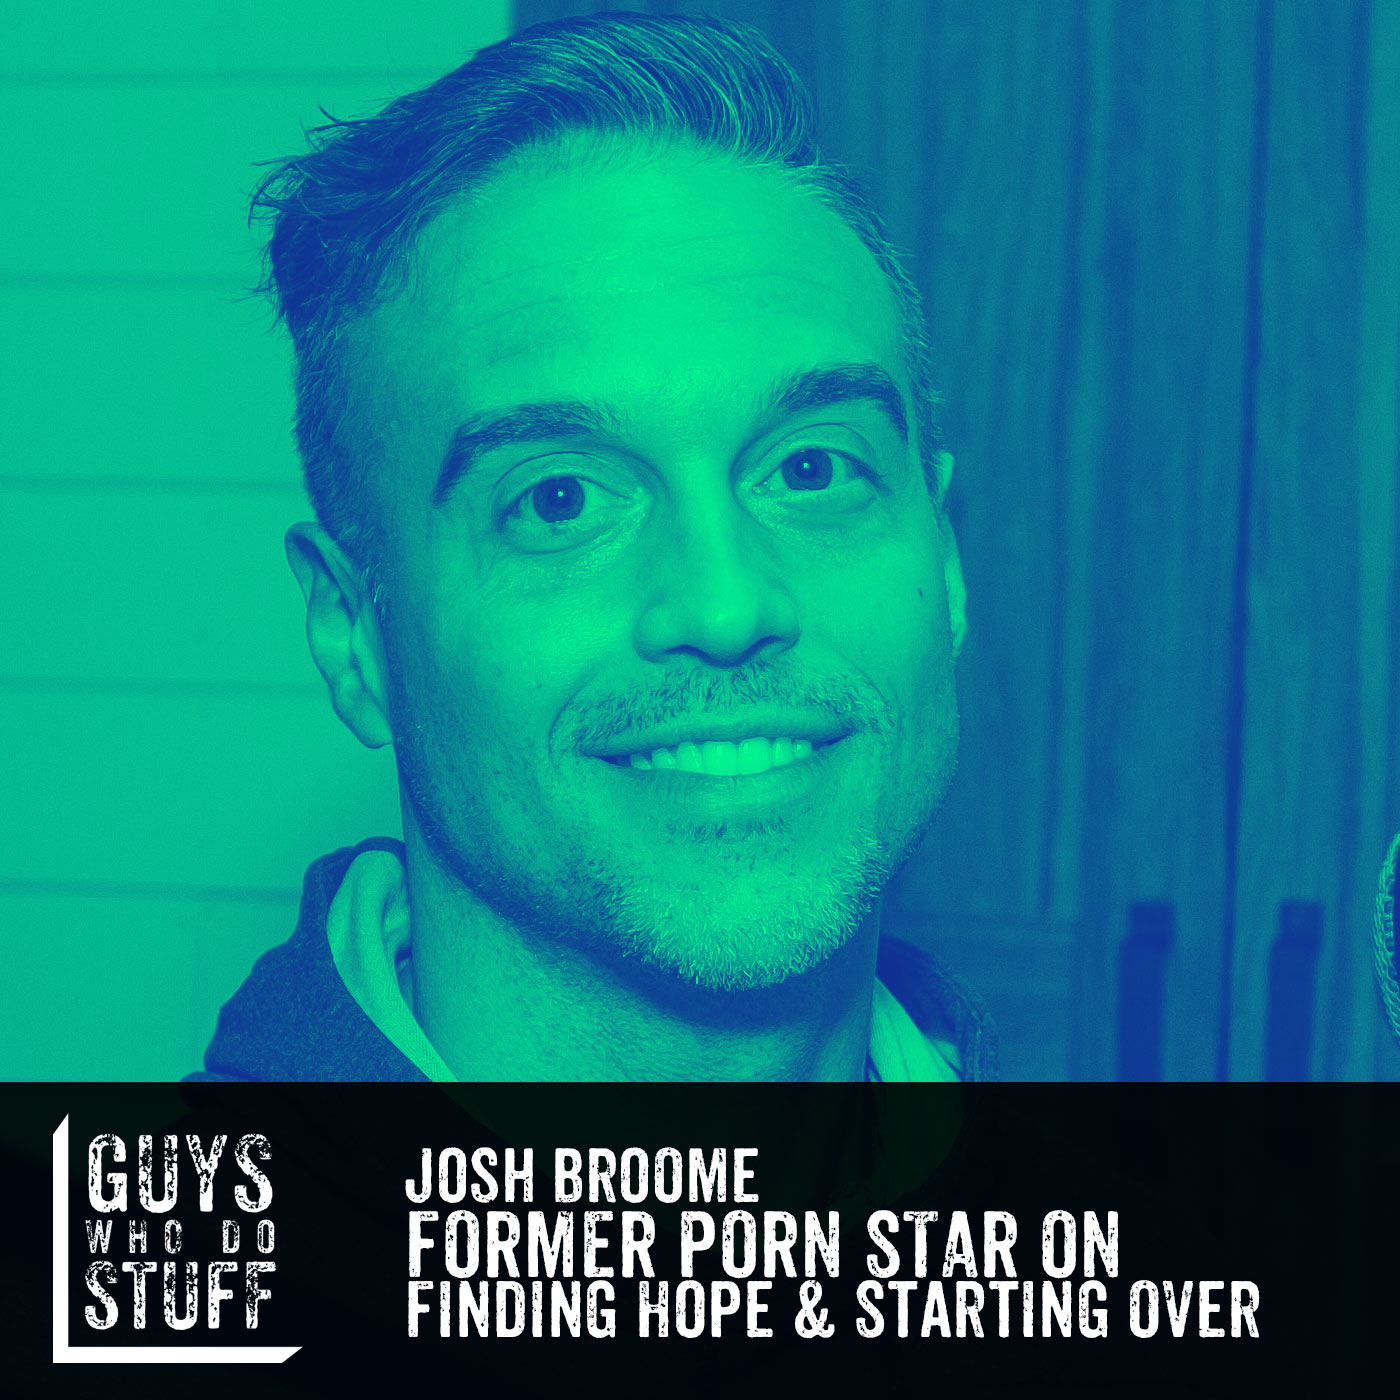 Josh Broome shares his inspirational story. 